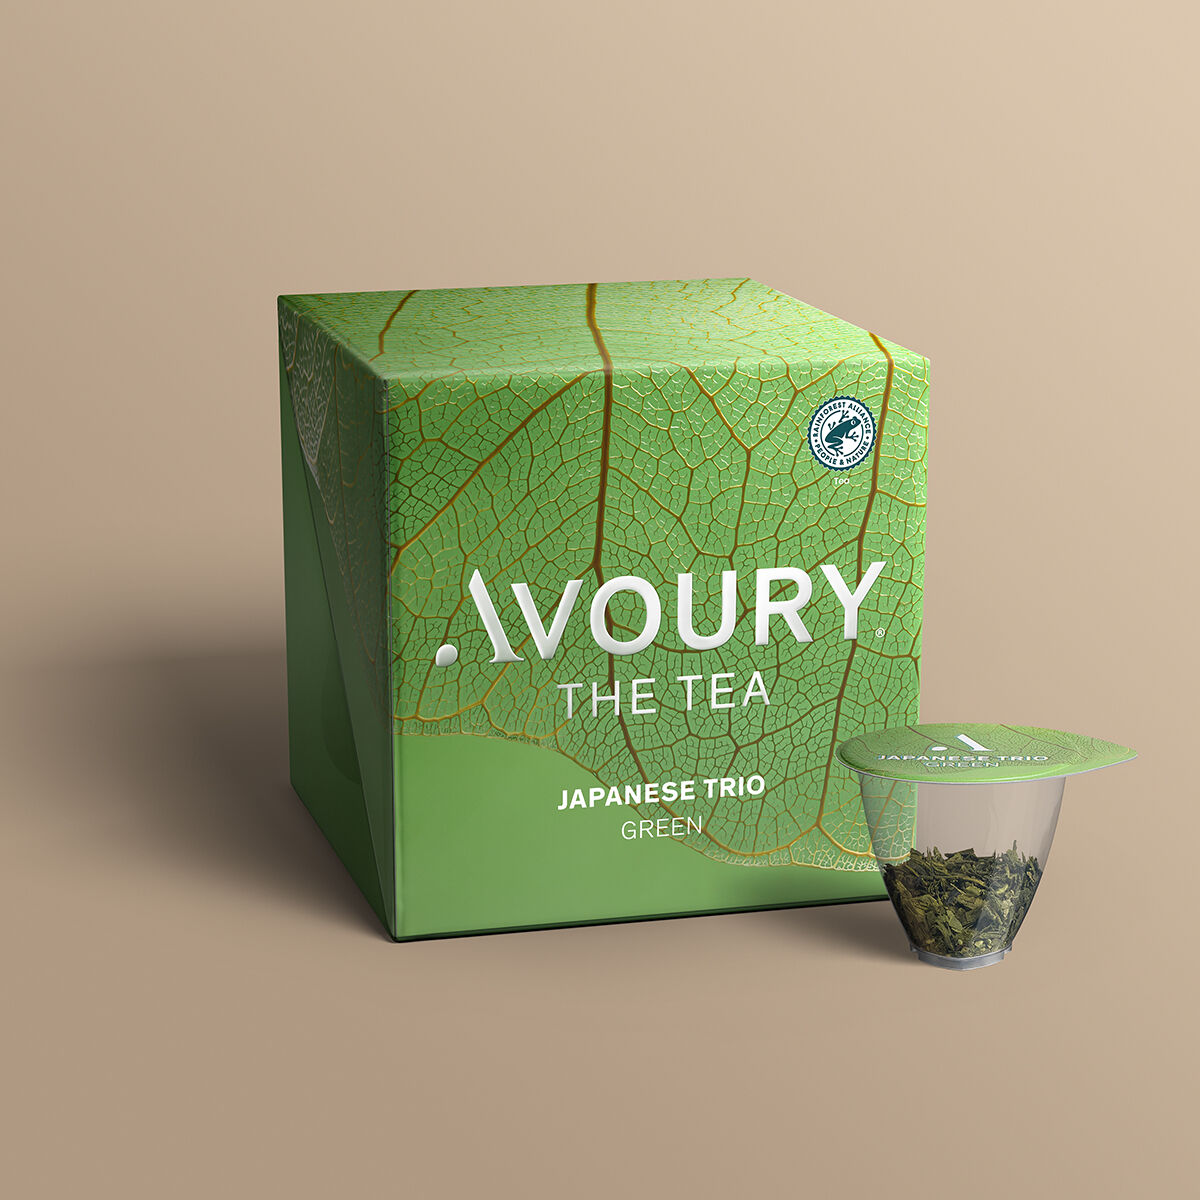 avoury tea box with capsule -JAPANESE TRIO